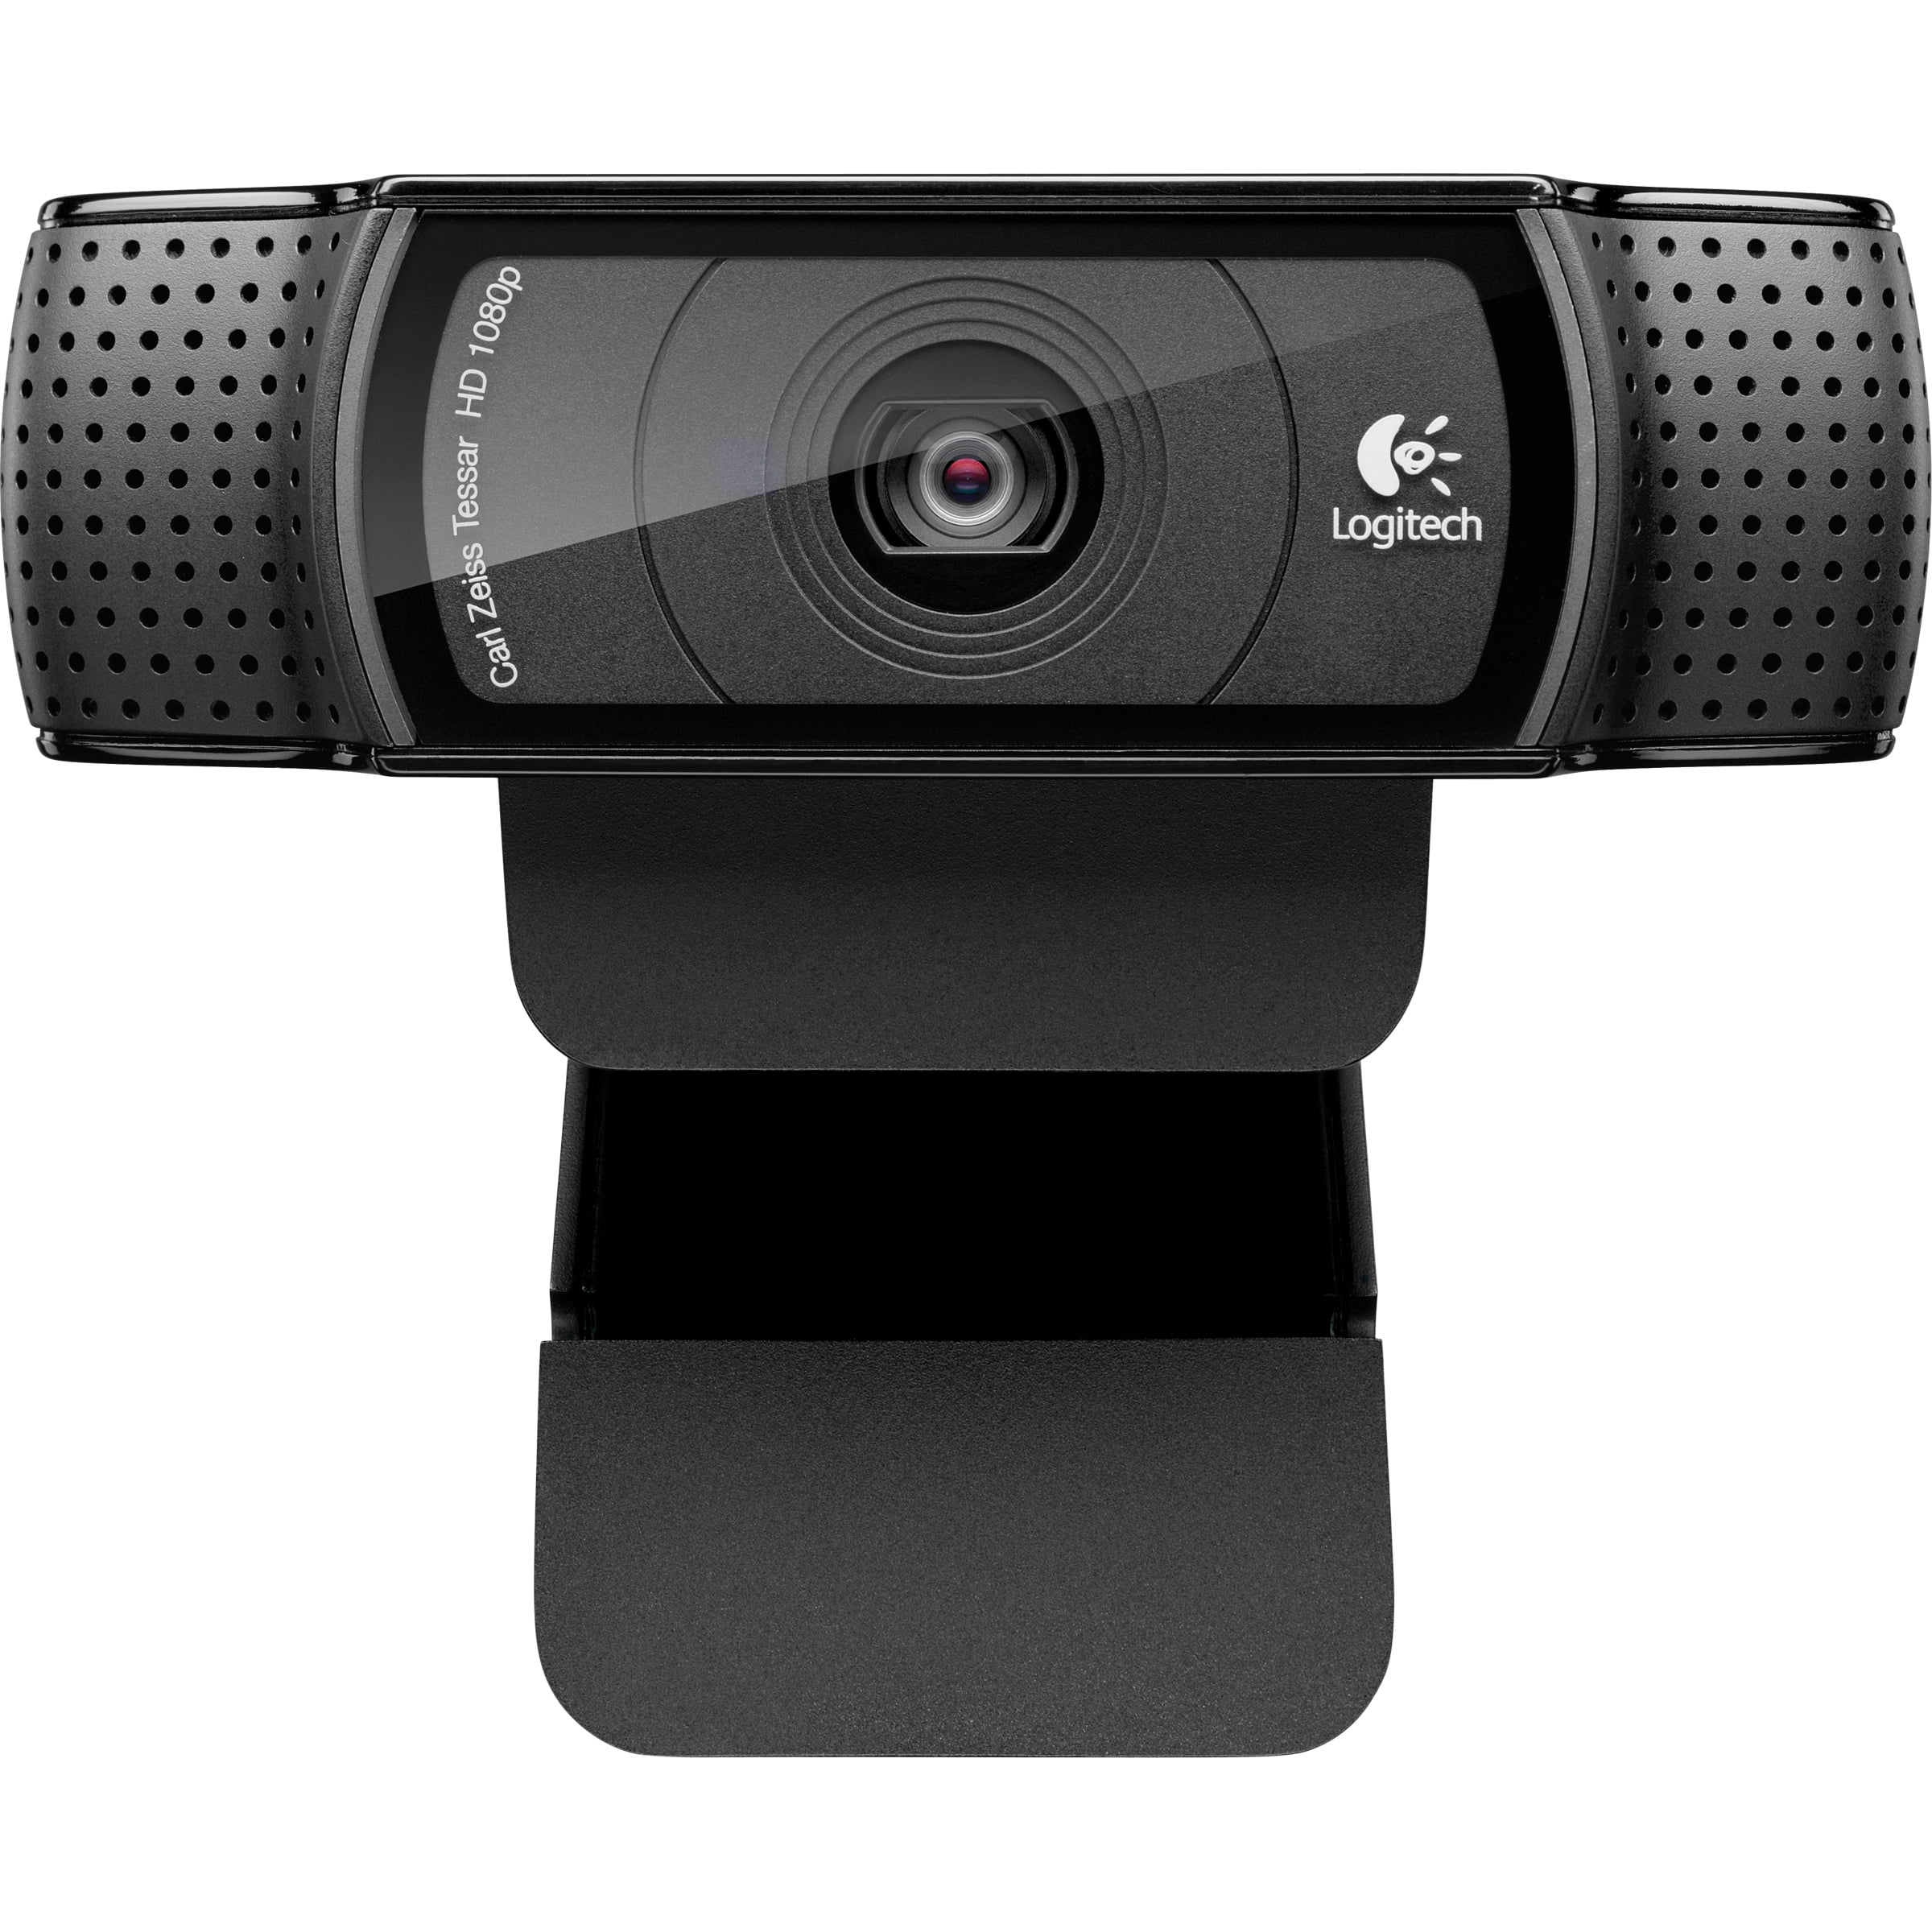 Logitech C920 Webcam, 30 USB 2.0 - Walmart.com